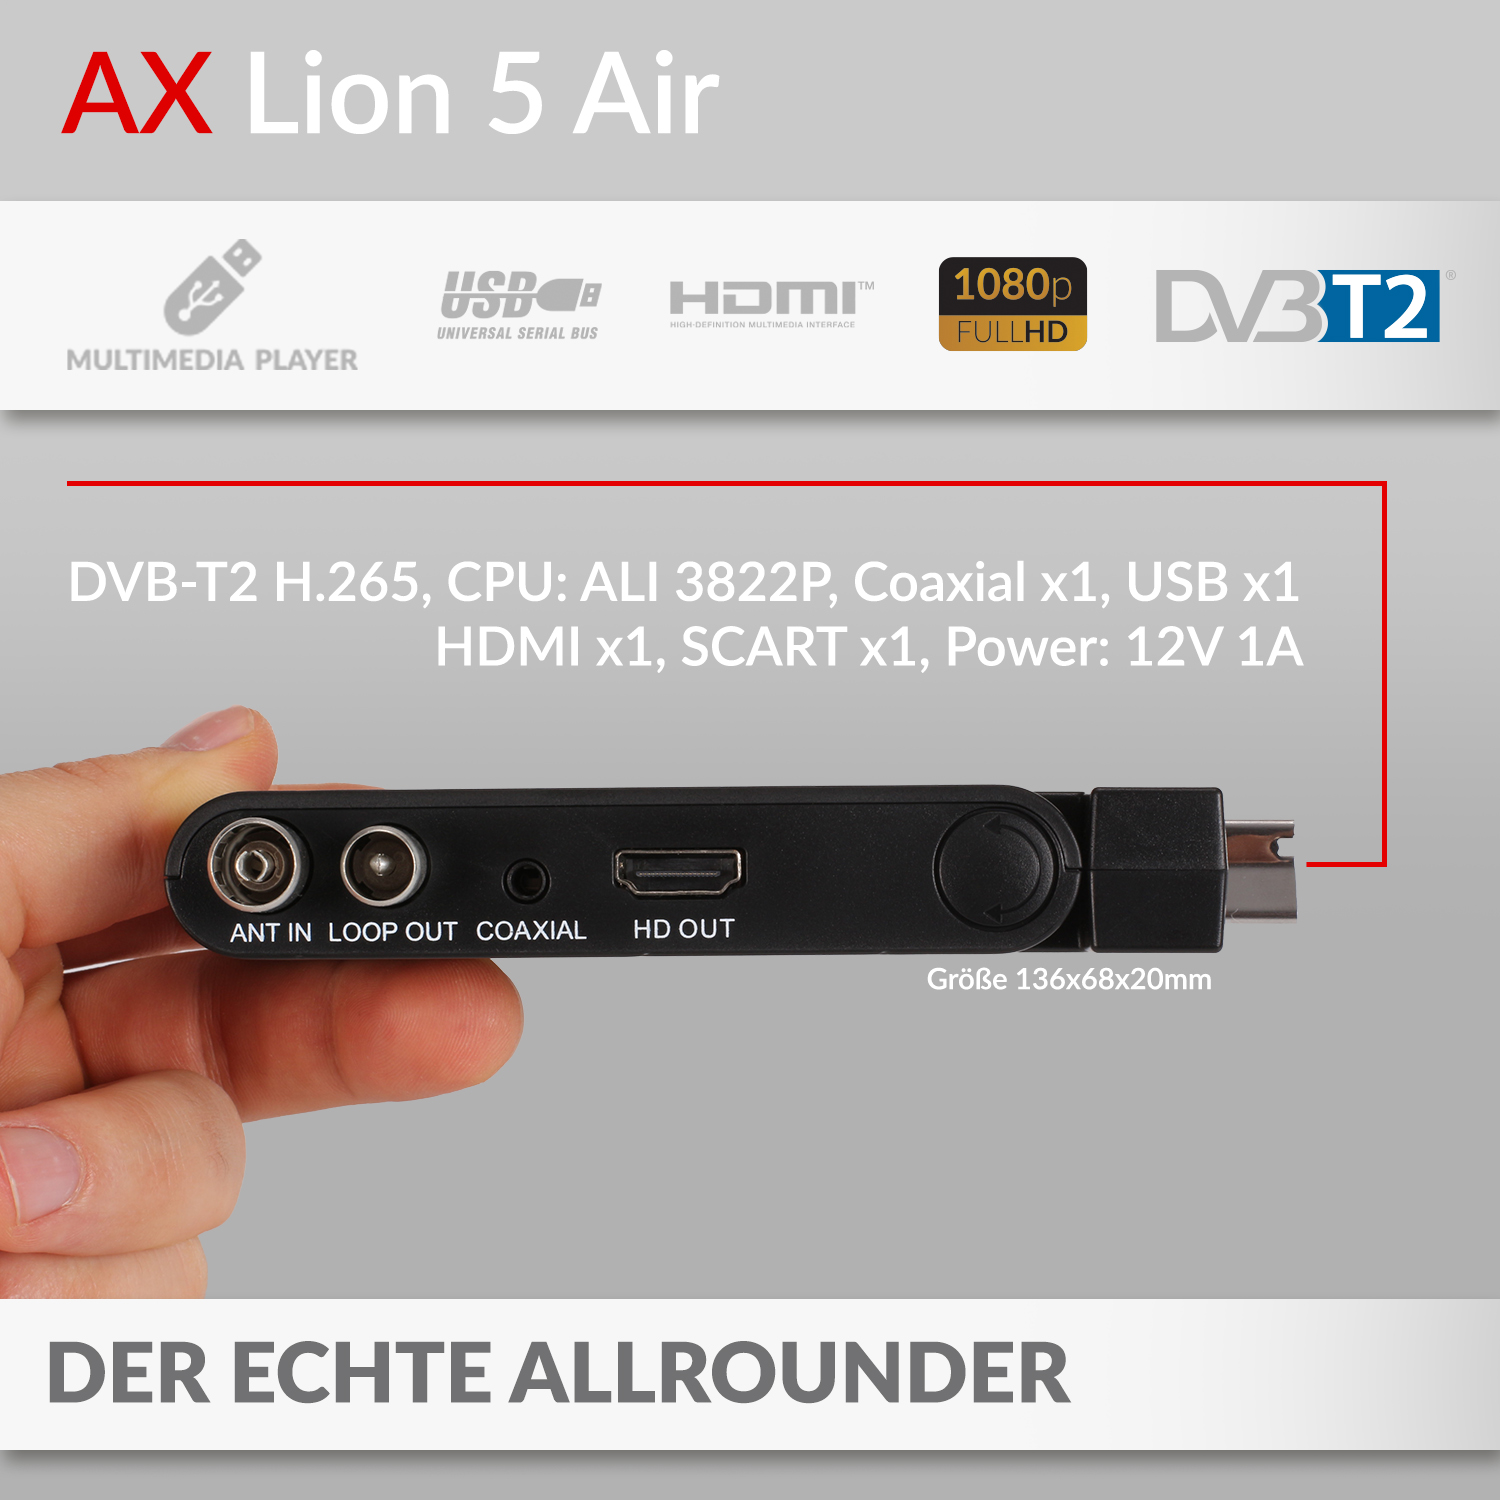 HDMI schwarz) PVR-Funktion, HD-Receiver DVB-T2 mit DVB-T2 AX Lion Aufnahmefunktion PVR OPTICUM DVB-T2 HD DVB-T2 (H.264), DVB-T2 AIR Receiver (HDTV, HD 5 Receiver I RED - SCART/ DVB-T, (H.265),